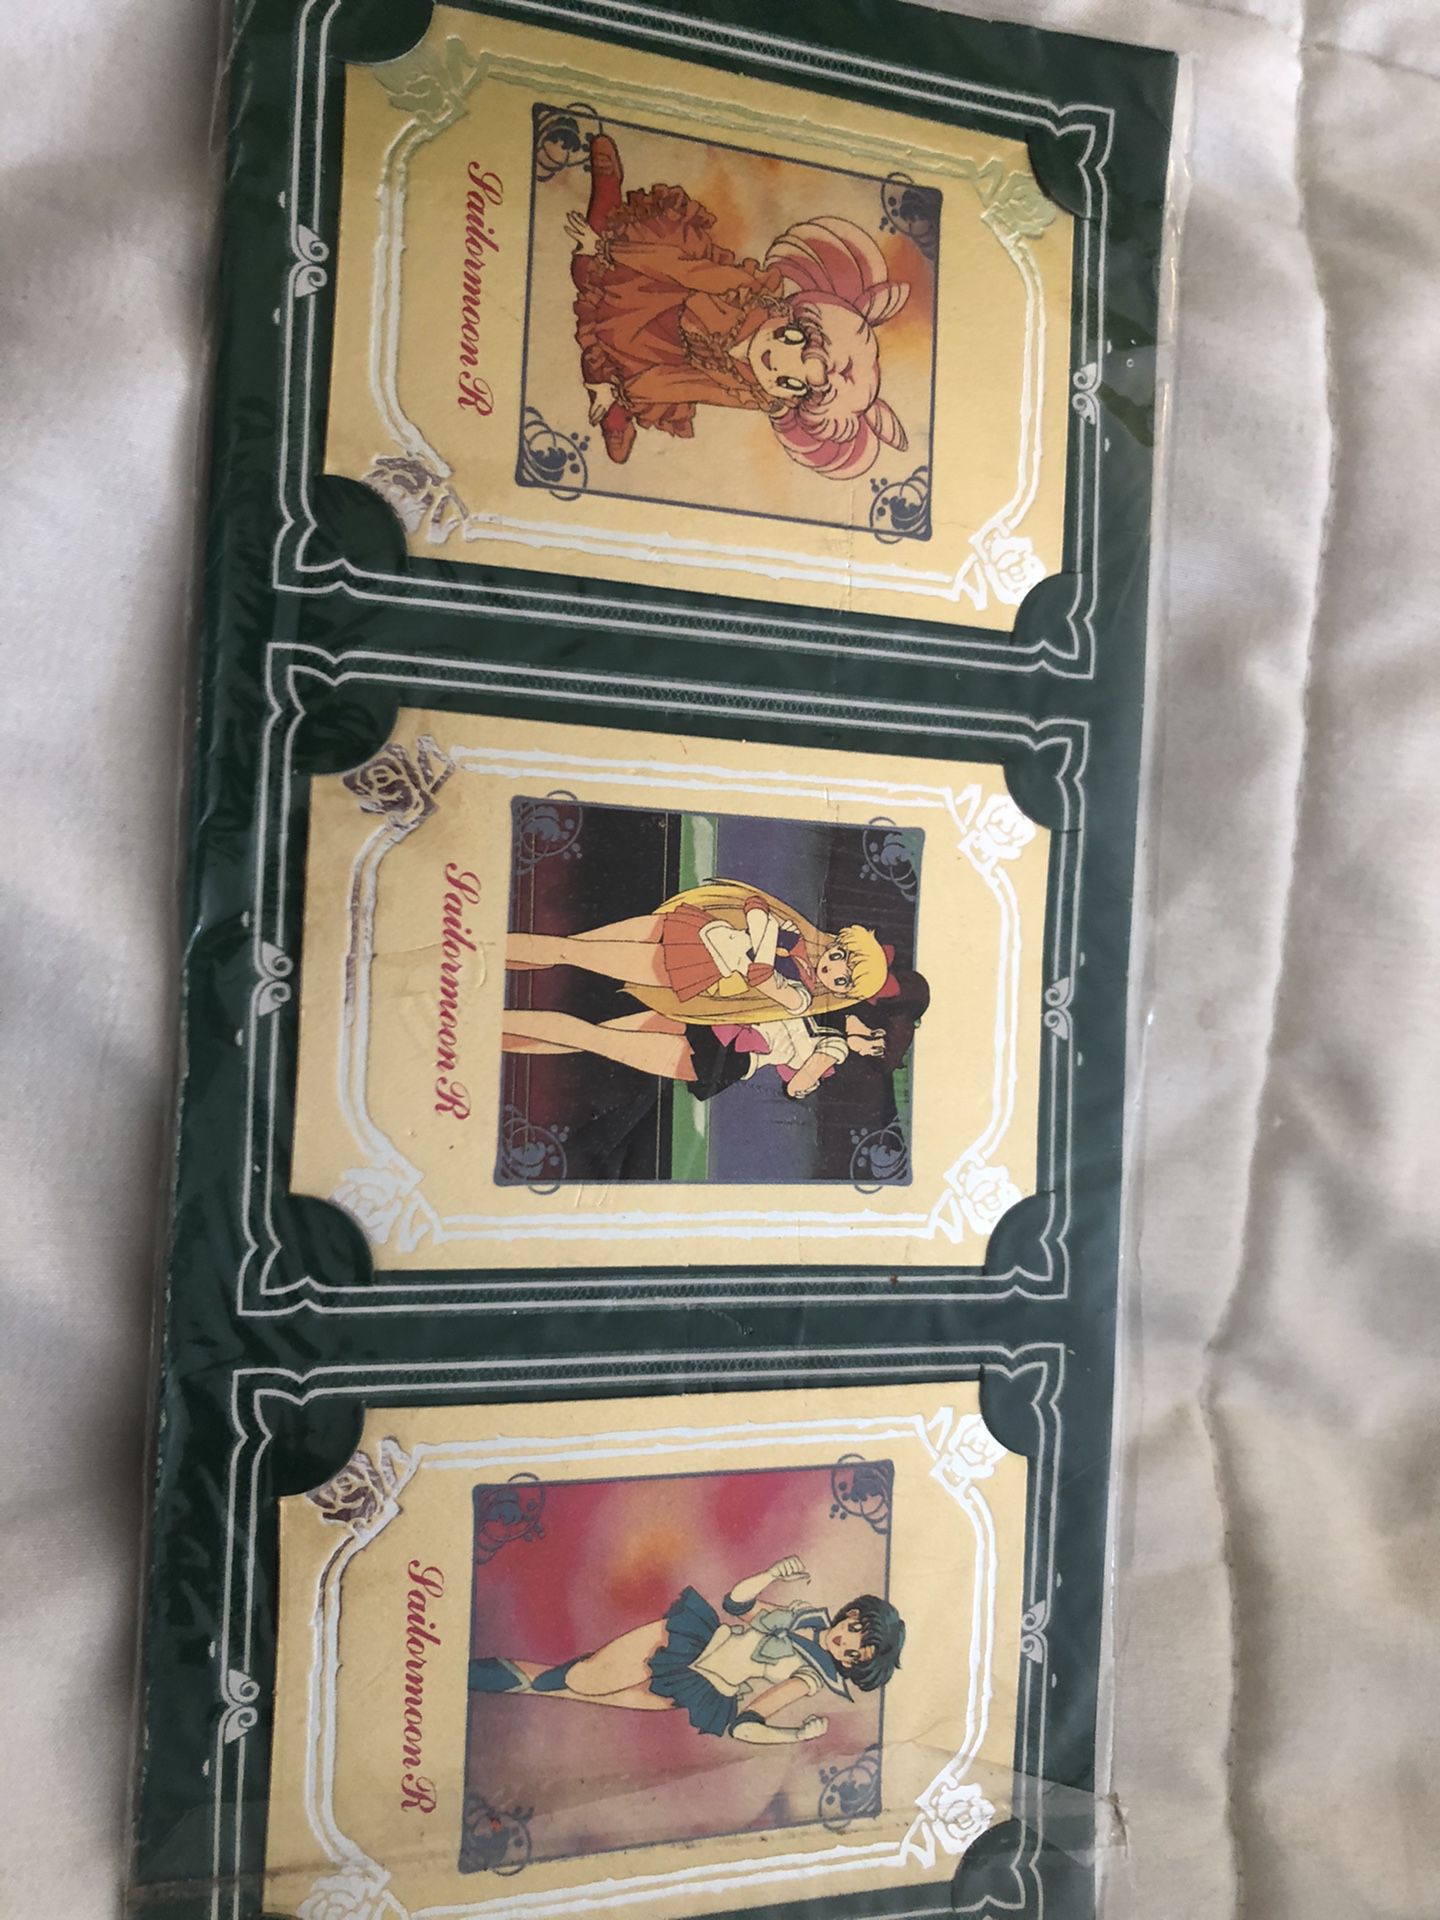 Collecting Sailor moon card